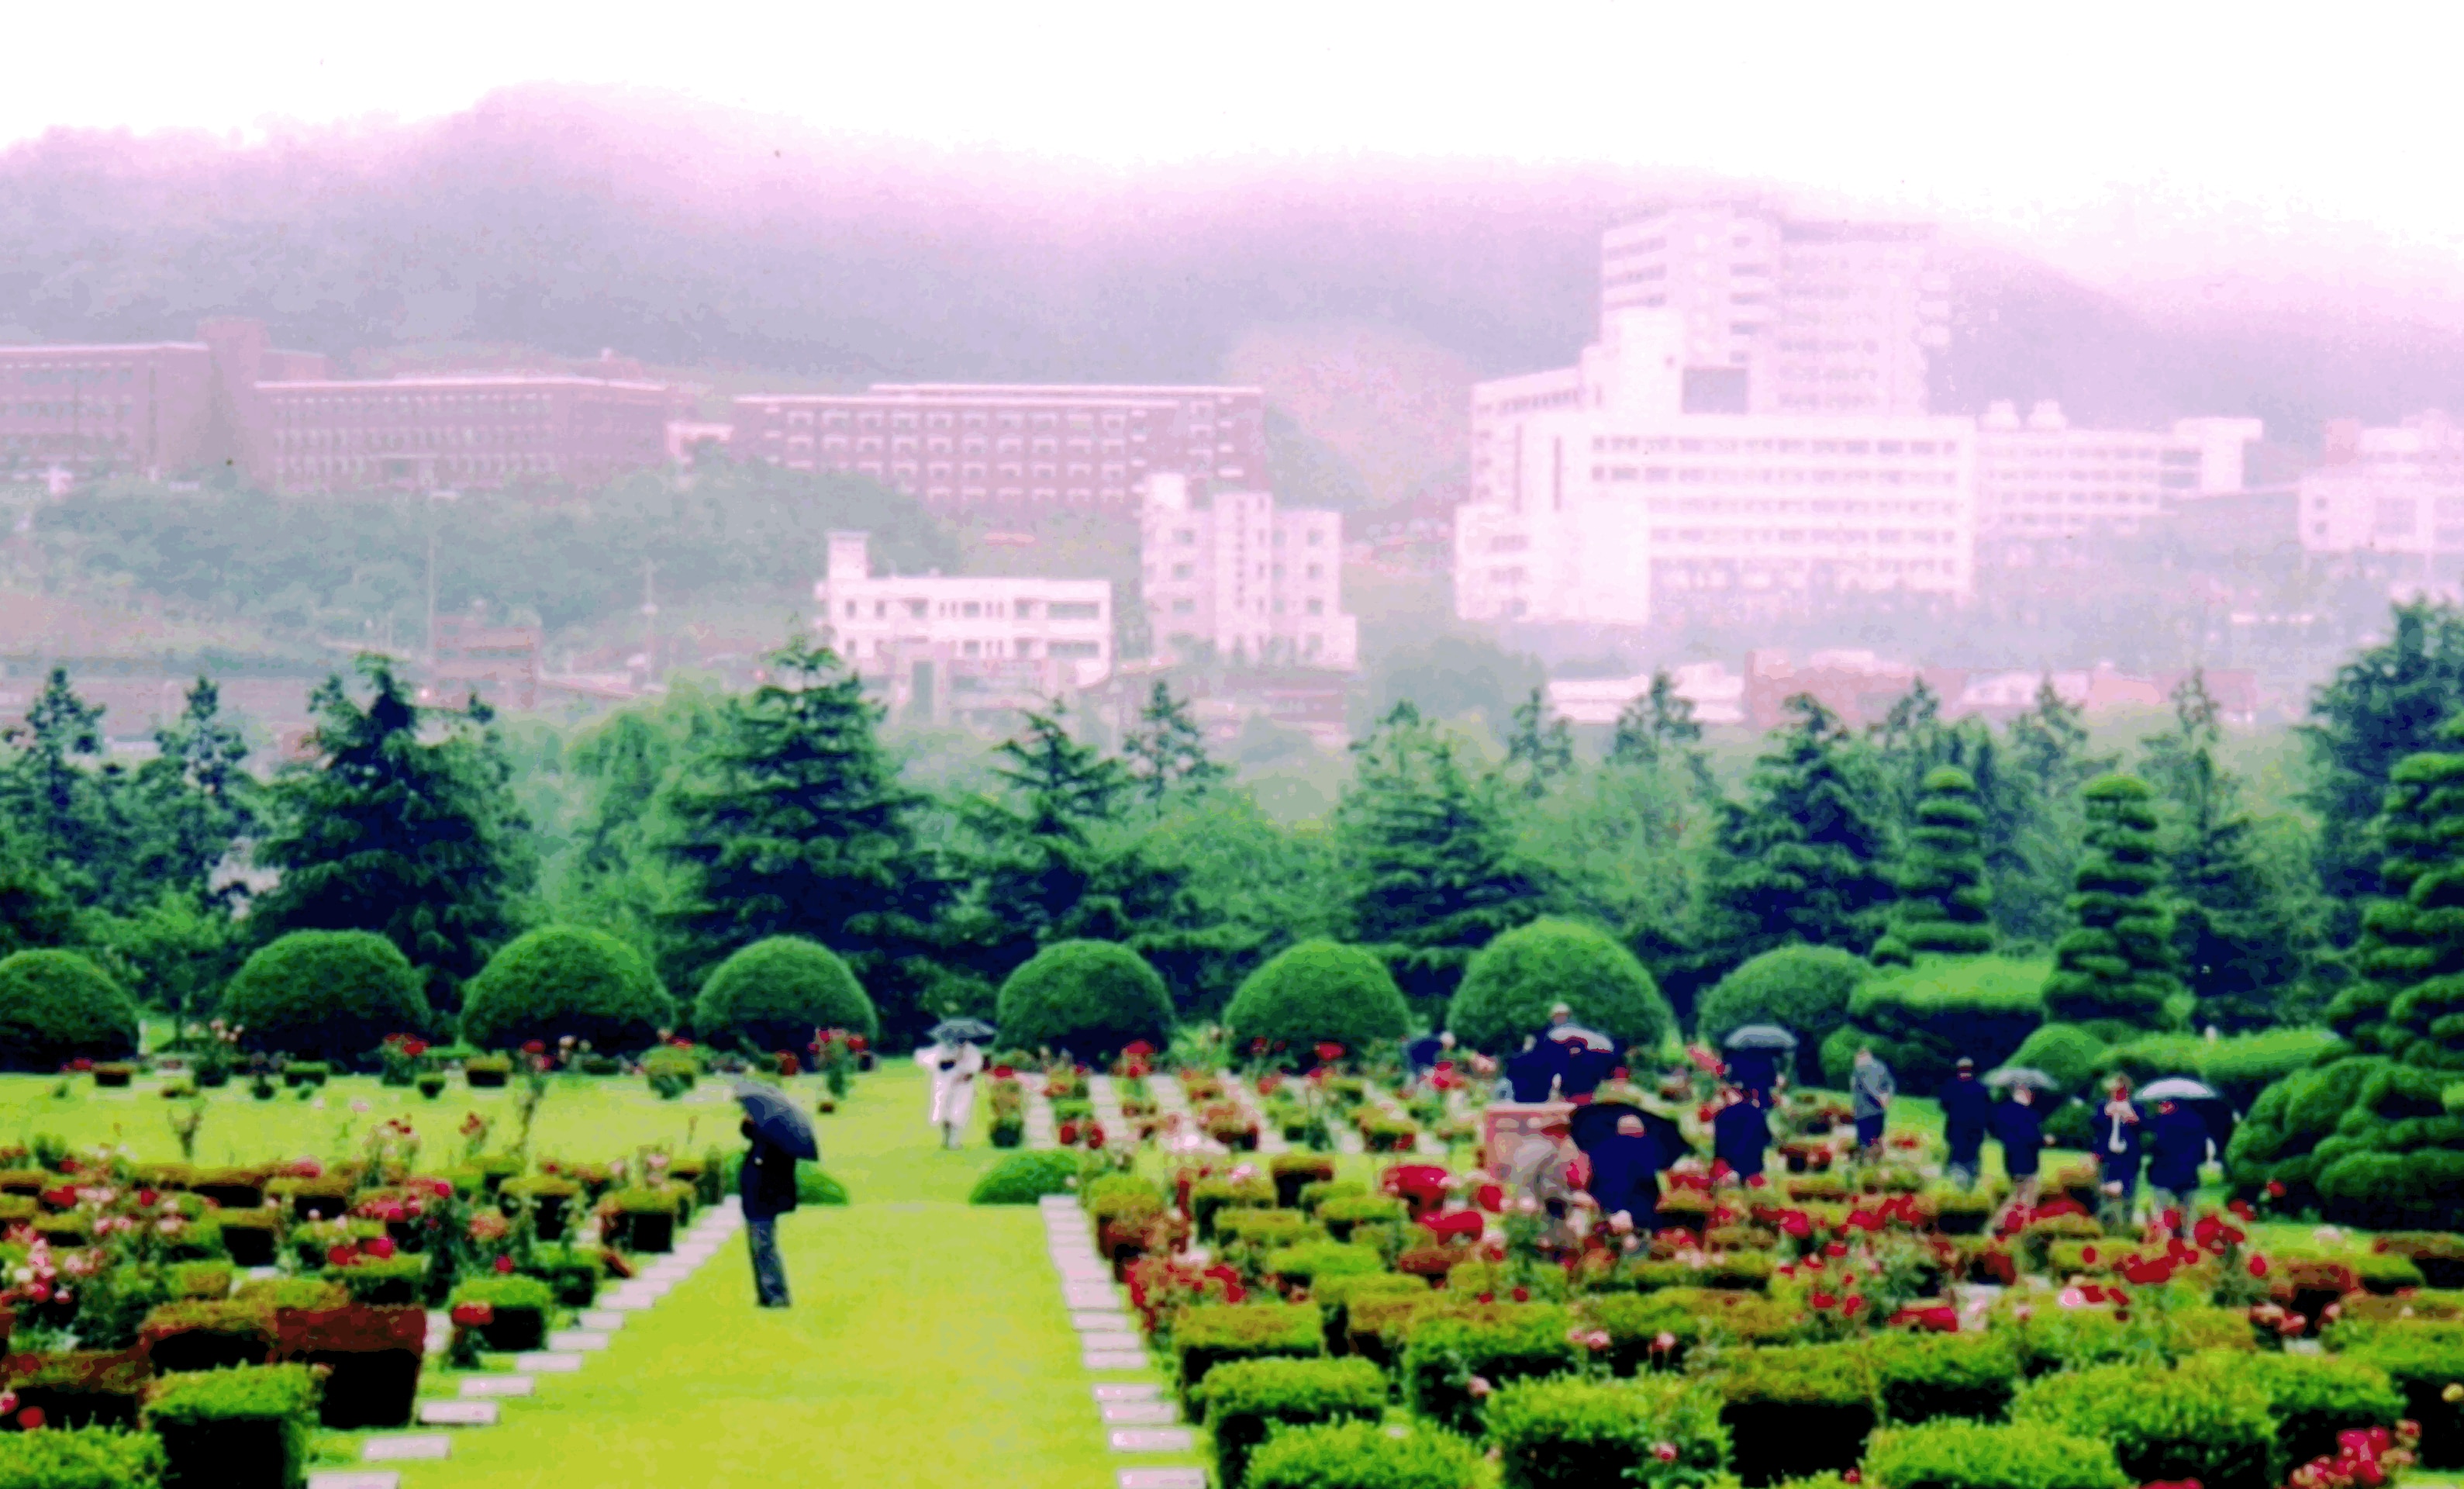 United Nations Memorial Cemetery in Busan, Korea in 2000